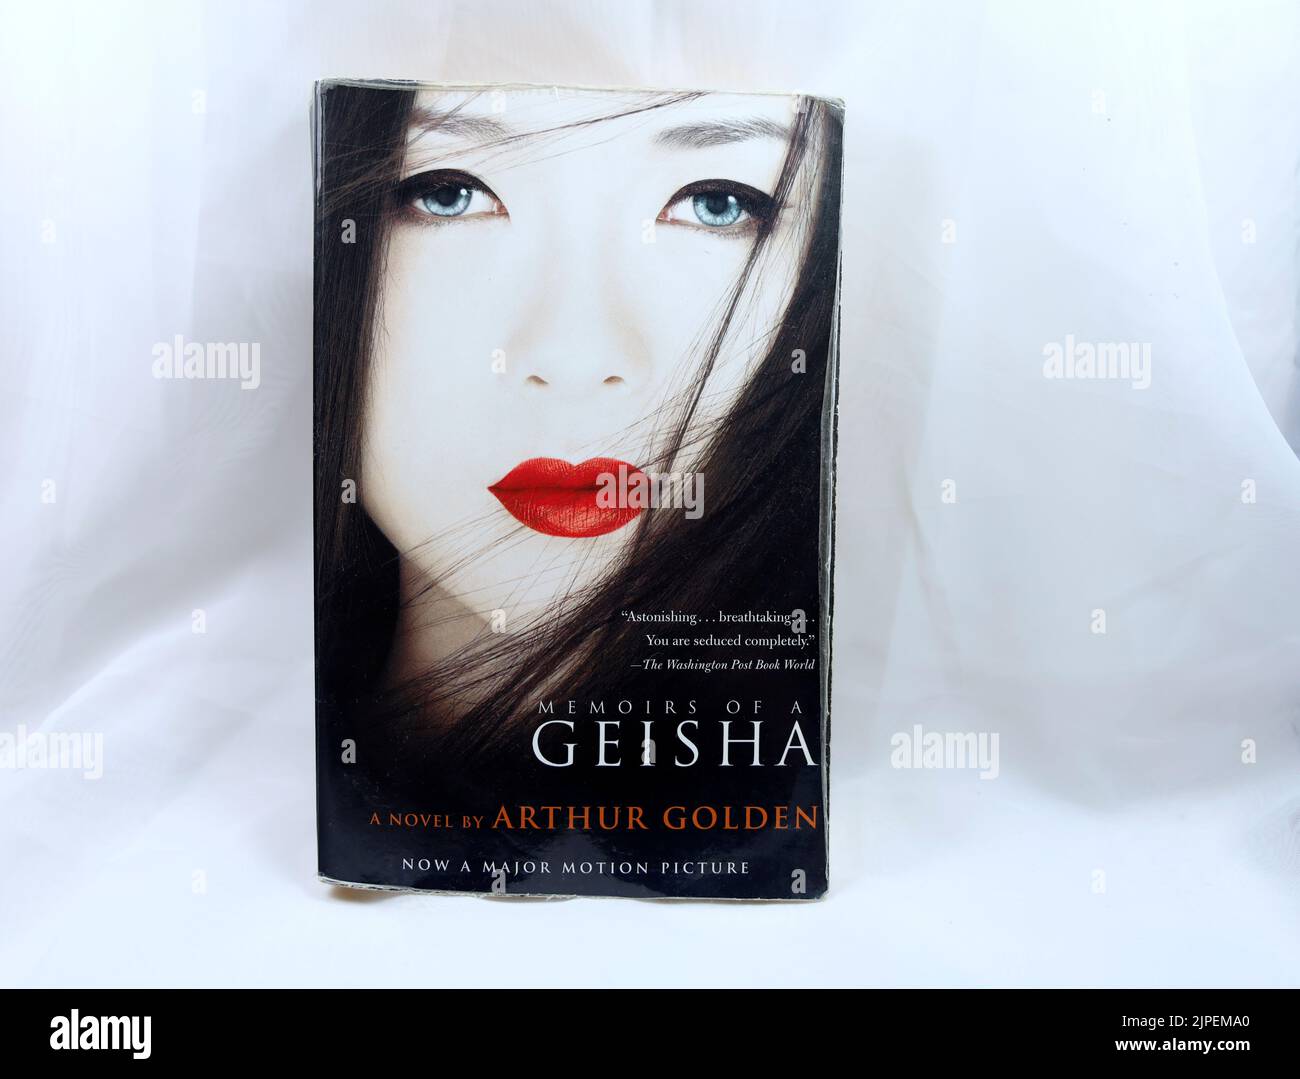 Memoirs of A Geisha - paperback book - a novel by Arthur Golden Stock Photo